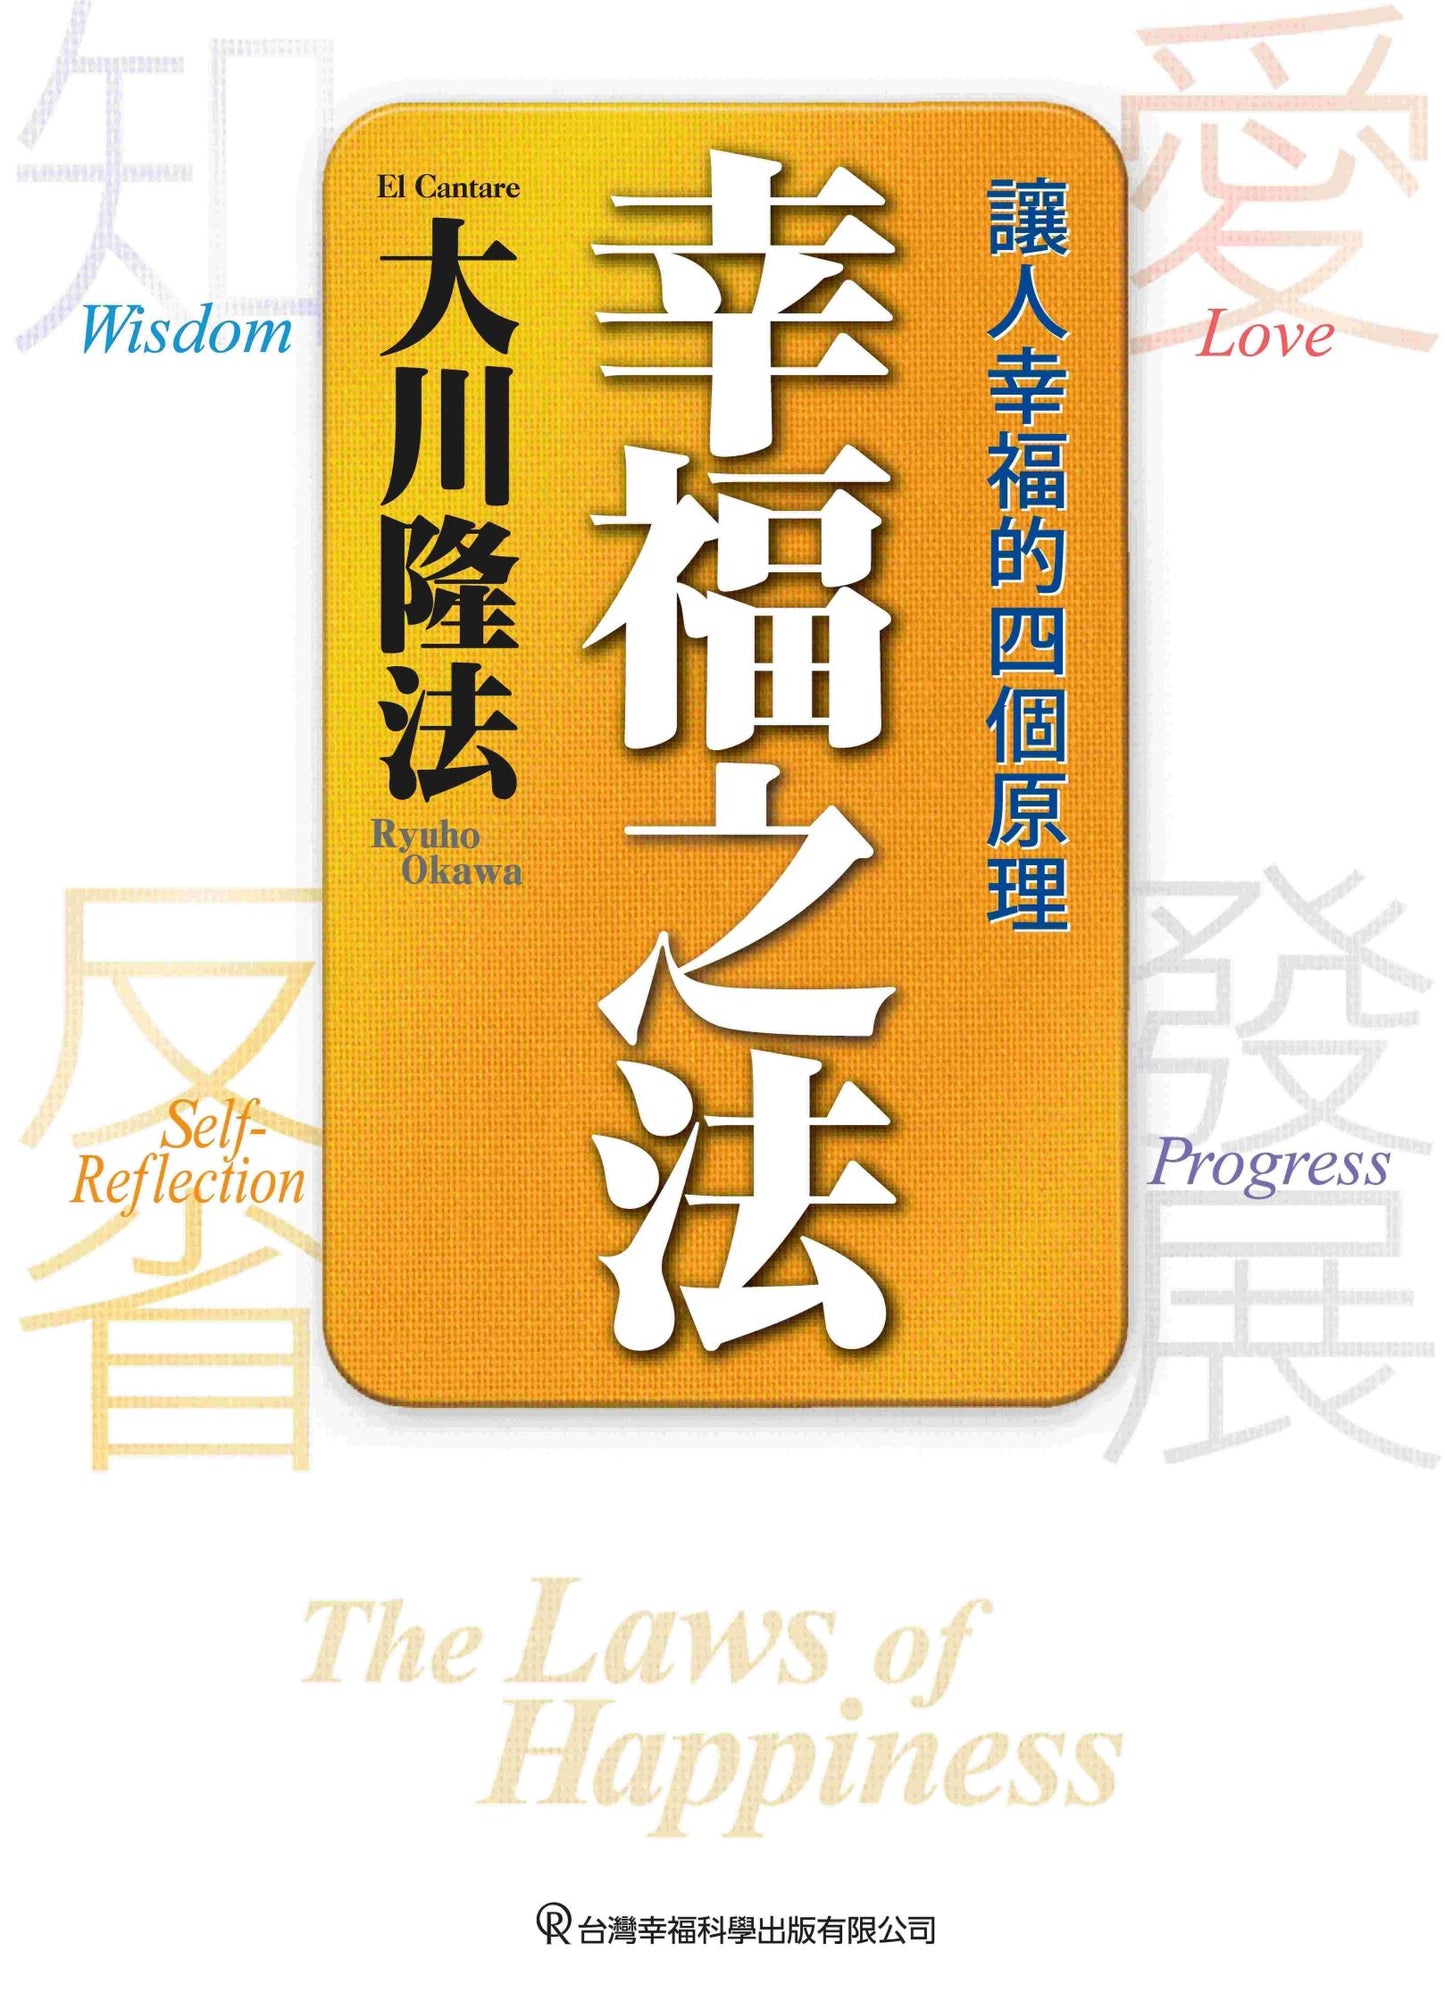 Book, The Laws of Happiness : Love, Wisdom, Self-Reflection and Progress, Ryuho Okawa, Chinese Traditional - IRH Press International